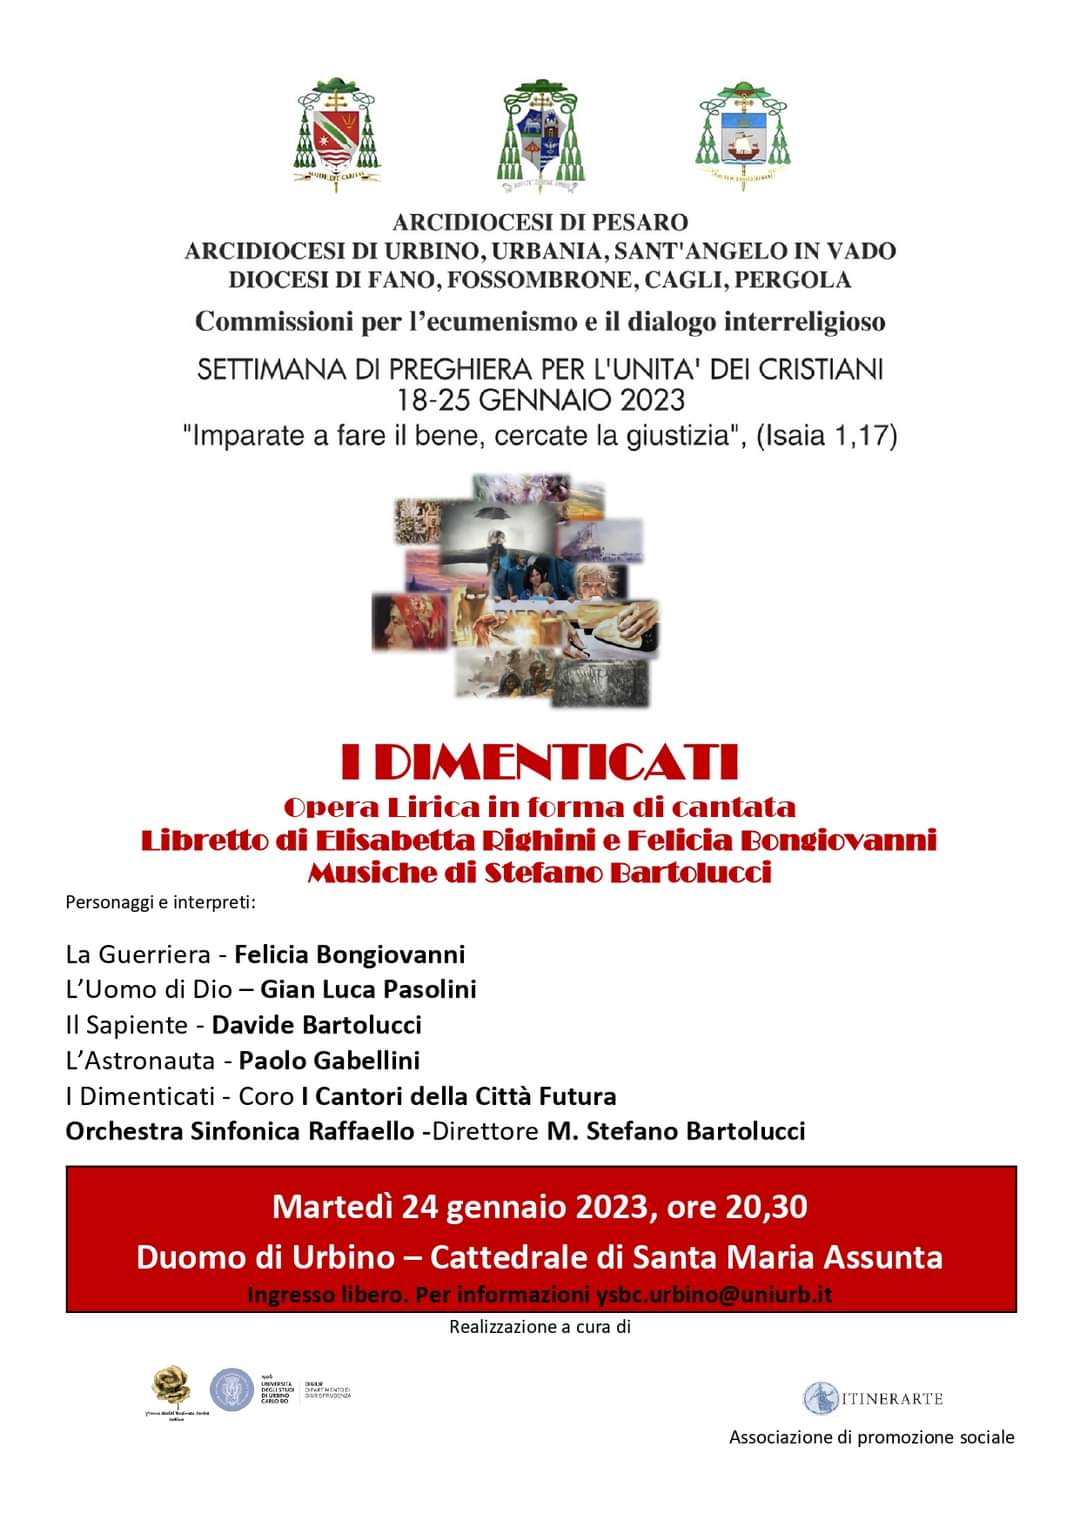 “I DIMENTICATI” Opera lirica 24/01/2023 20:30 Duomo di Urbino